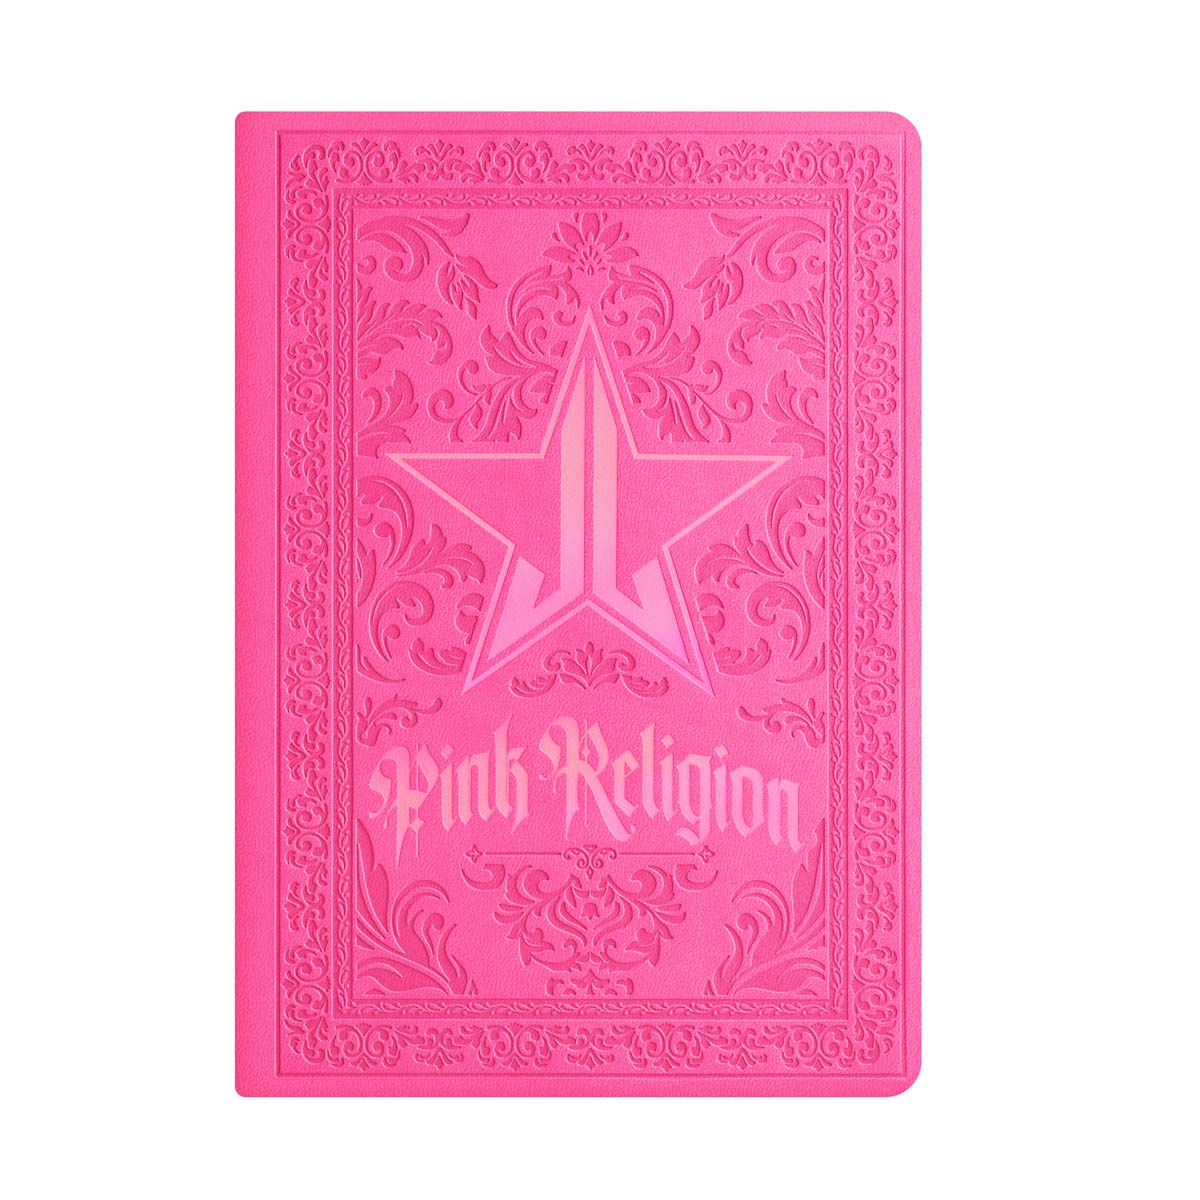 Pink Religion Palette